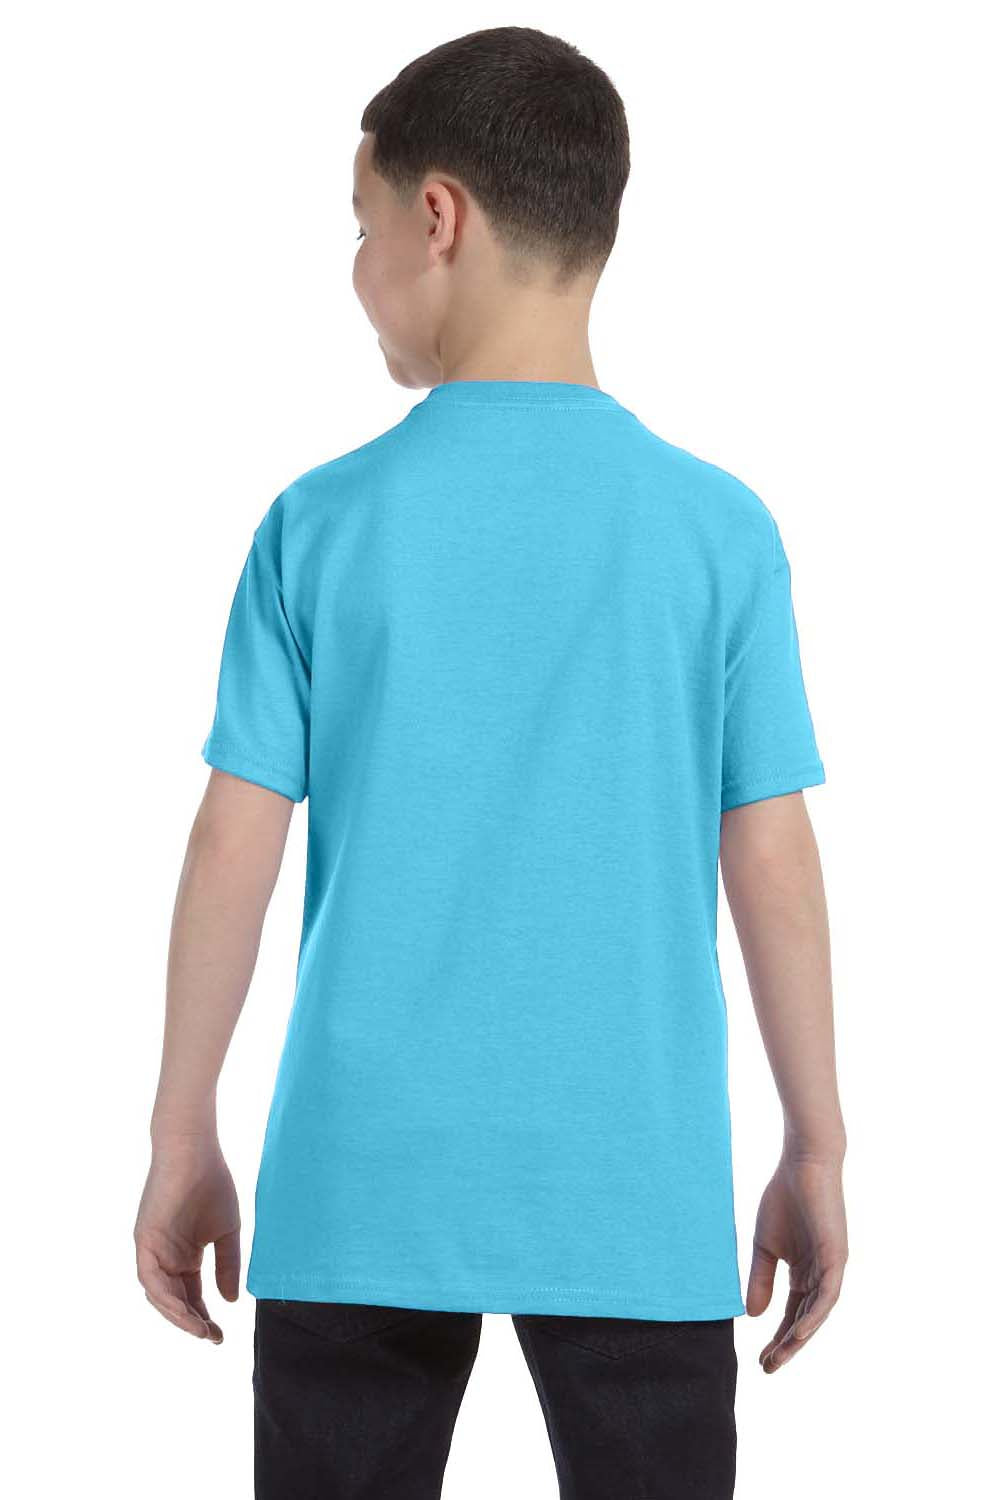 Hanes 54500 Youth ComfortSoft Short Sleeve Crewneck T-Shirt Blue Horizon Back